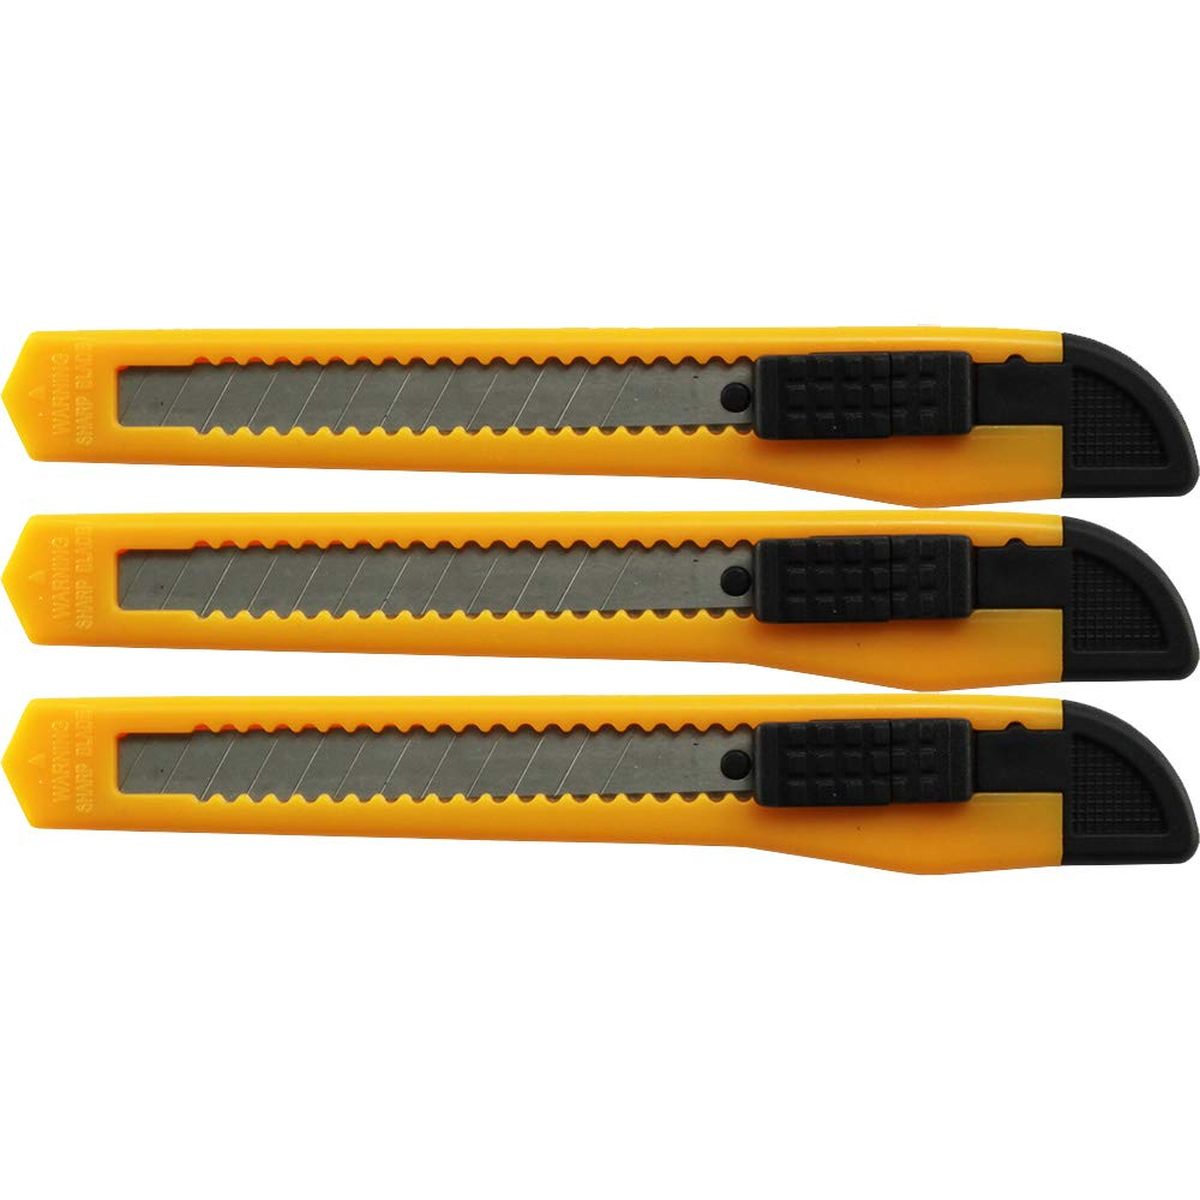 3 Yellow Utility Knife Box Cutters Heavy Duty Industrial Strength 